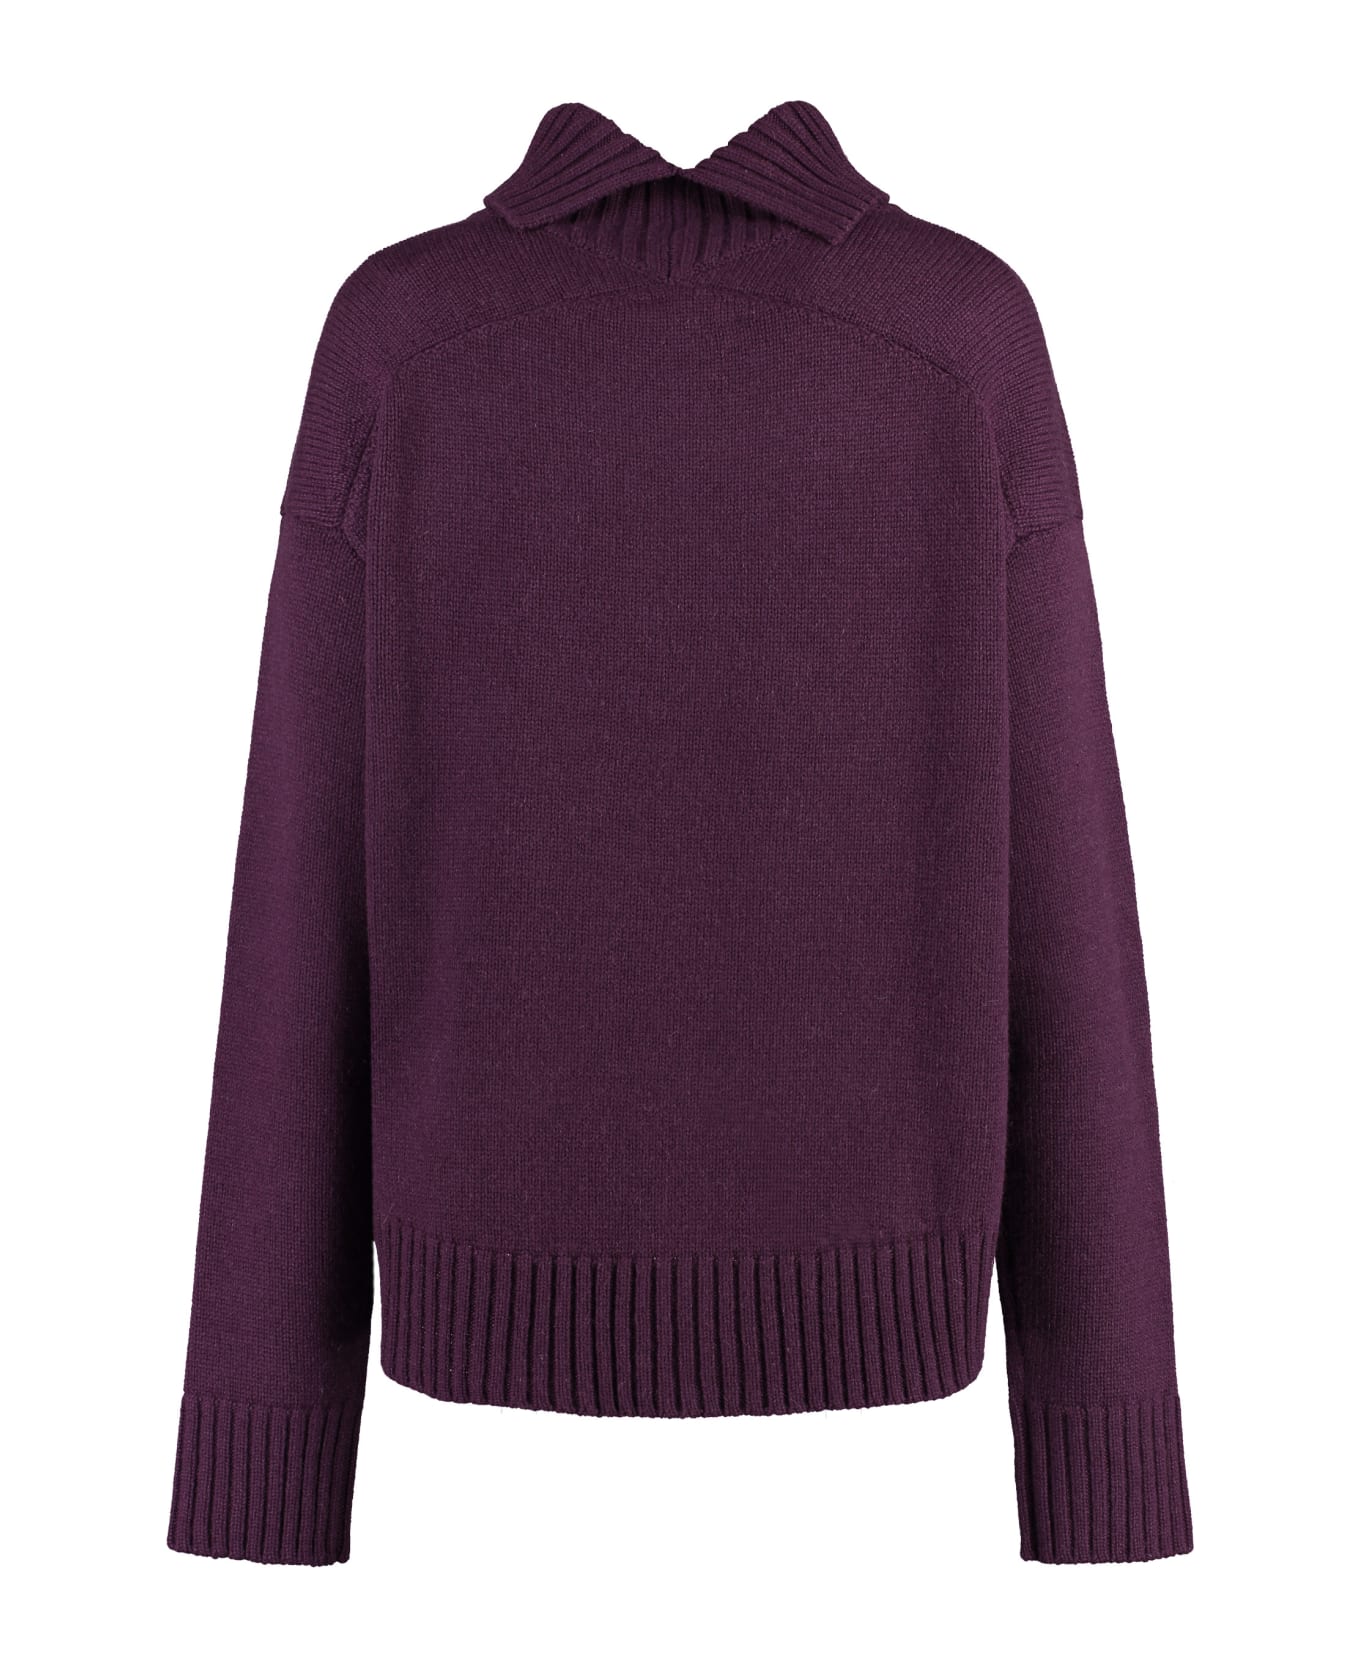 Jil Sander Cashmere Sweater - purple